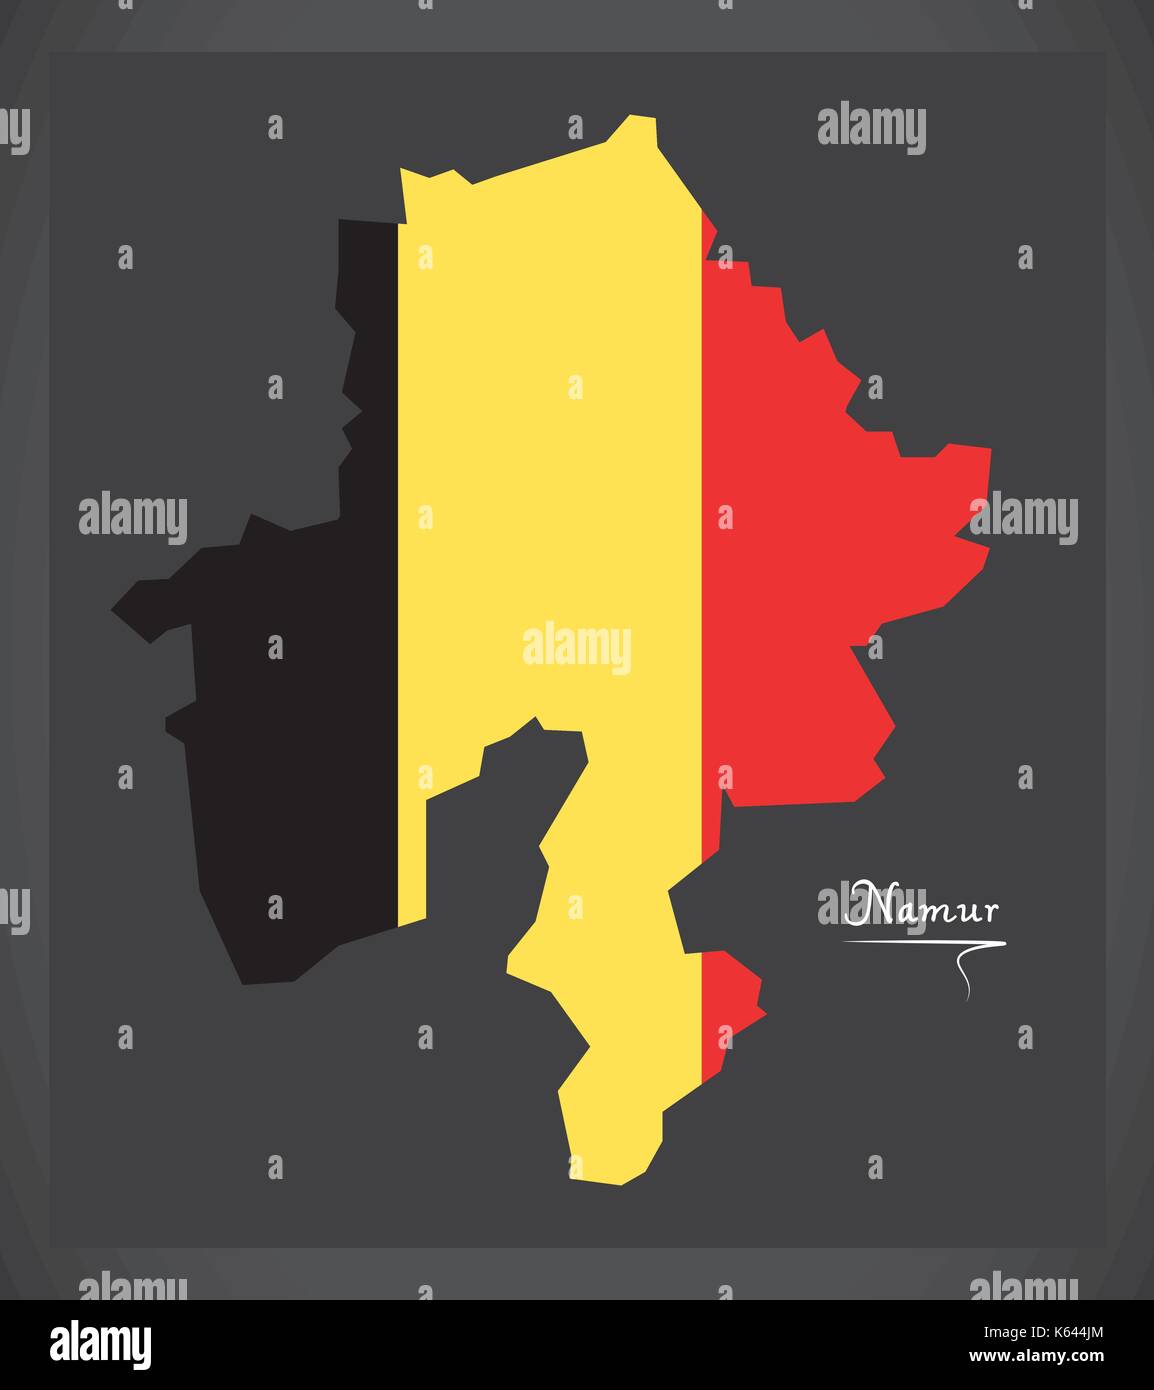 Namur map of Belgium with Belgian national flag illustration Stock Vector